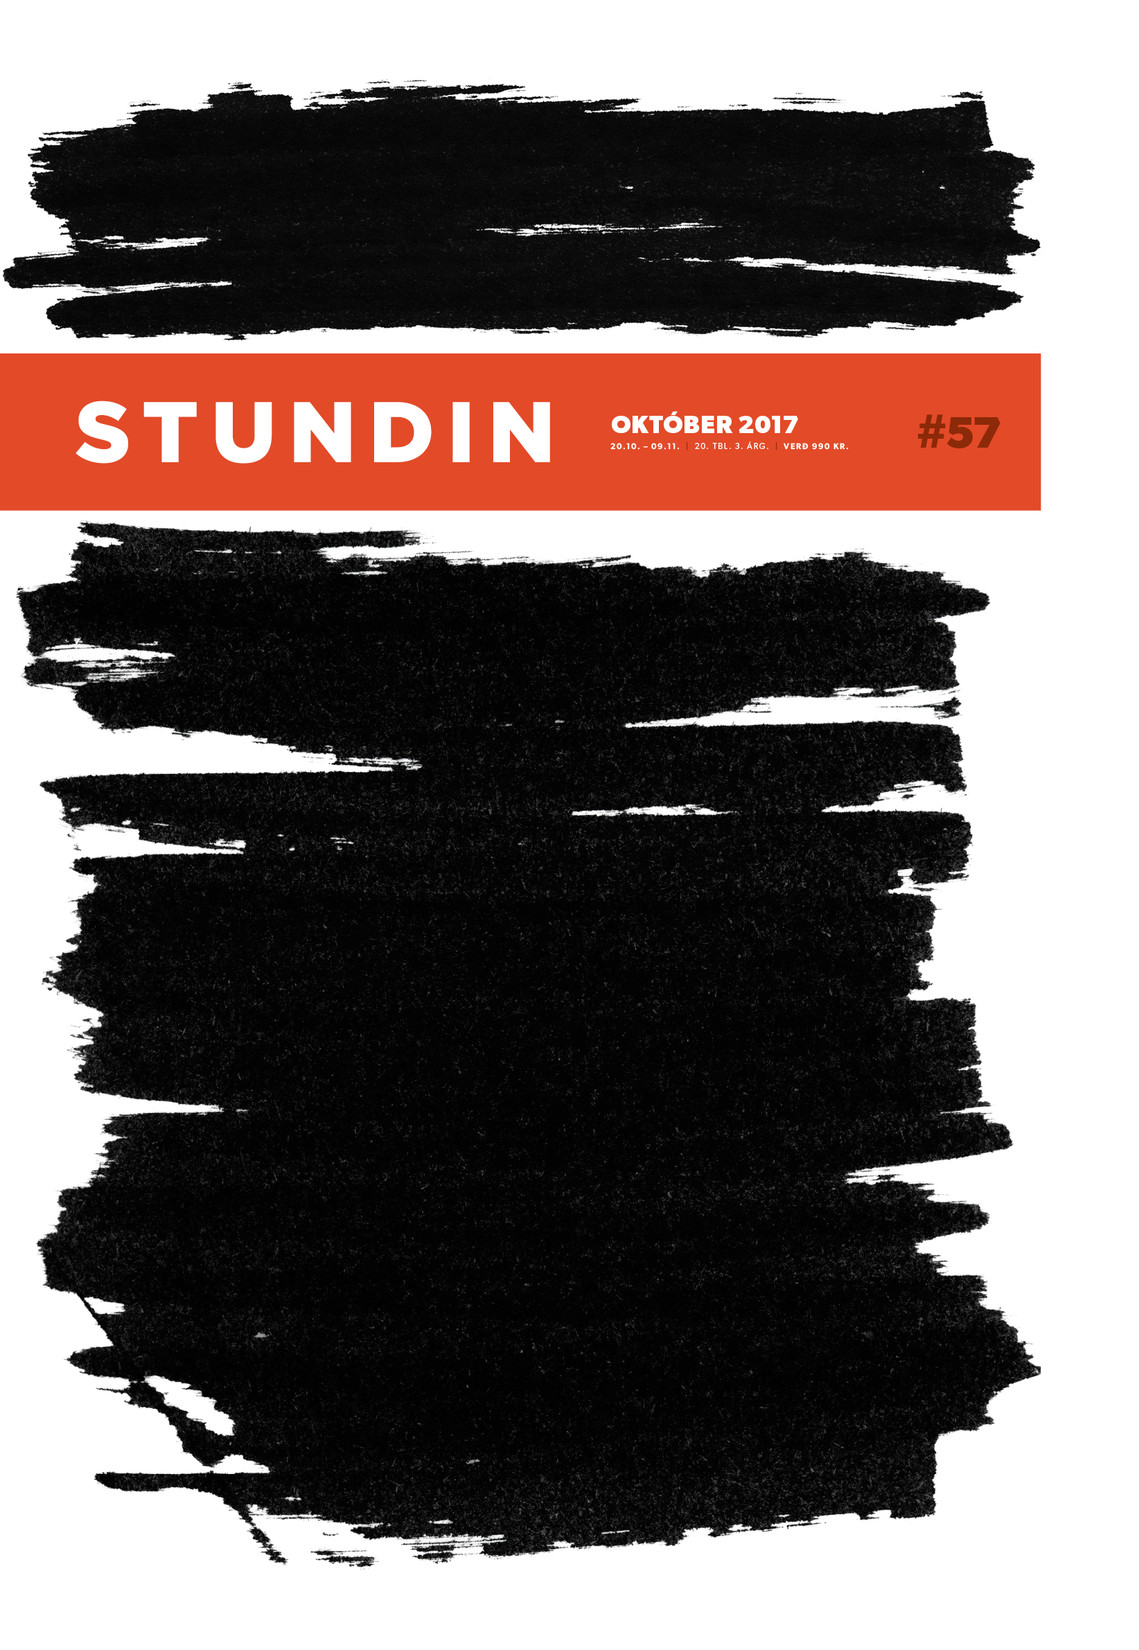 Stundin - Útgáfa #57